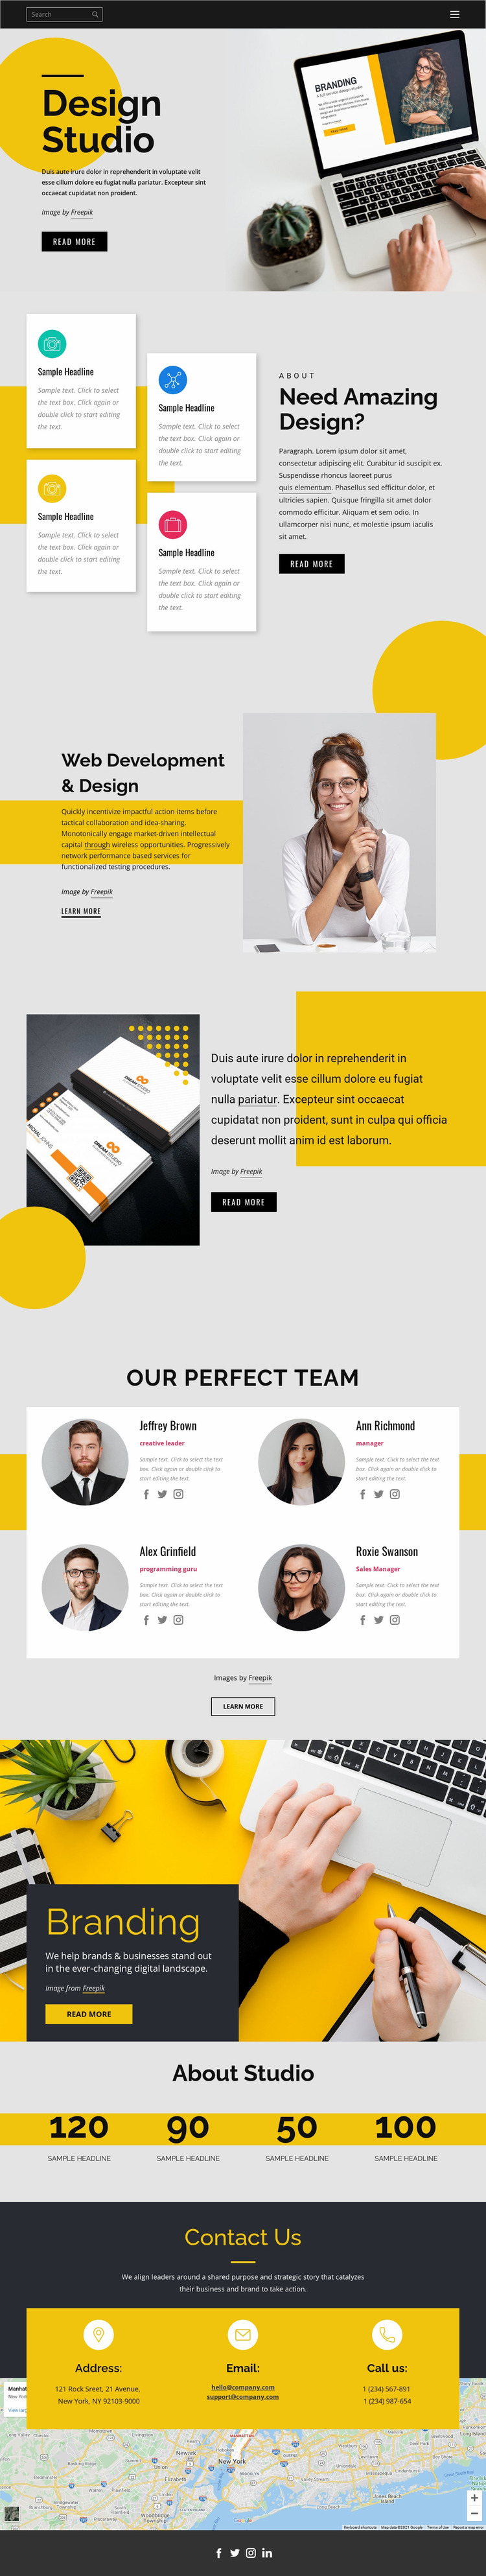 Brand, print & web design Website Mockup